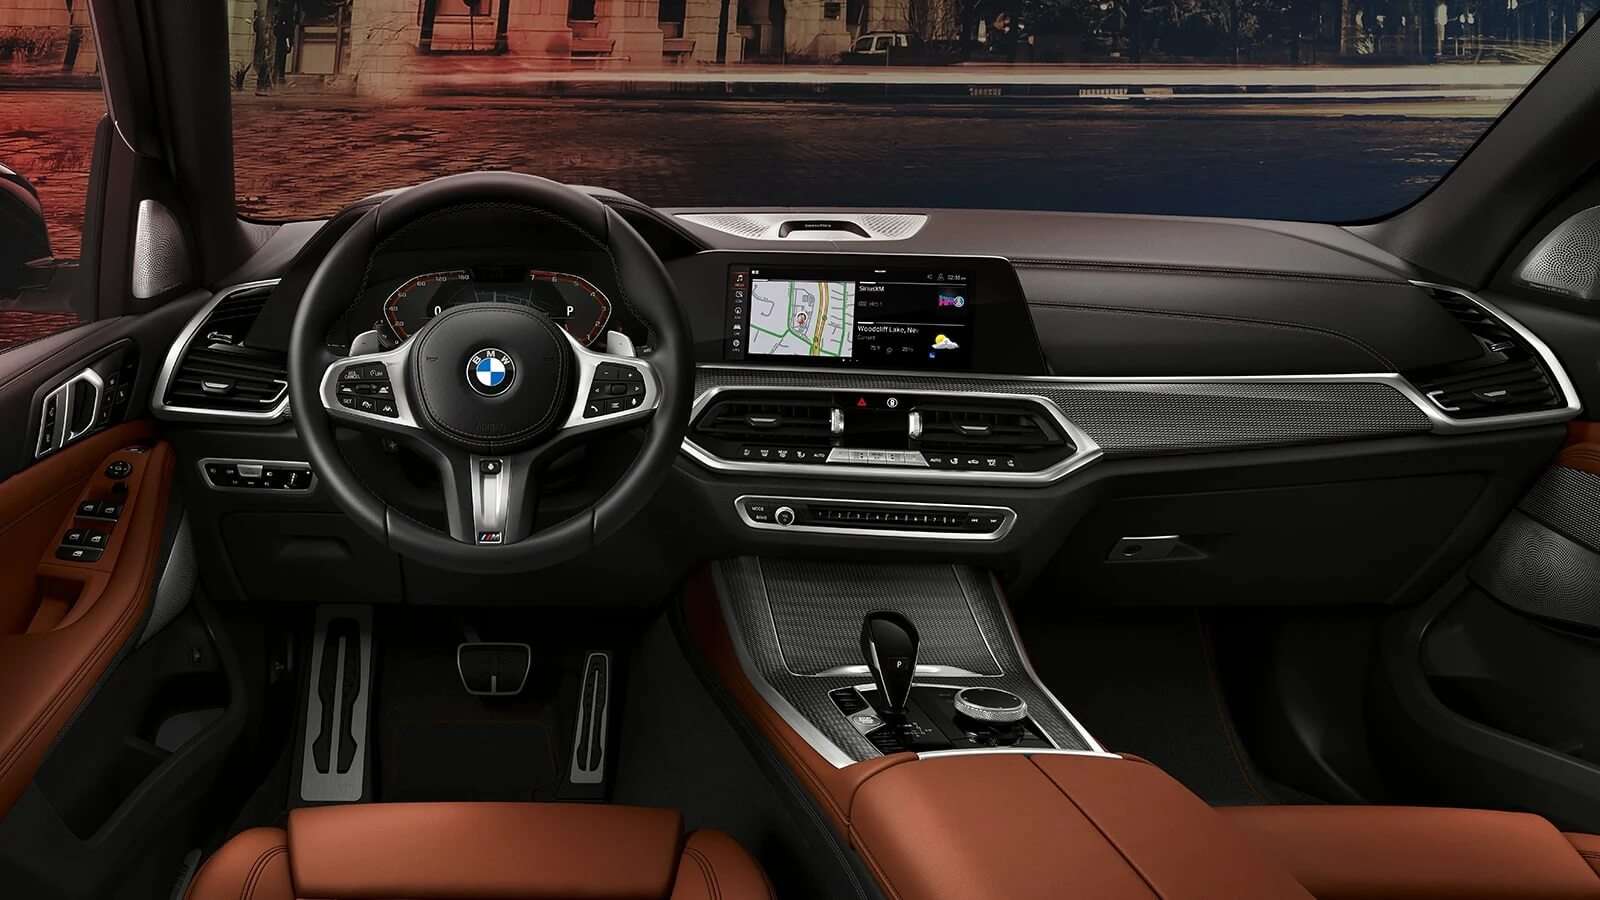 BMW X5 Interior Design 1